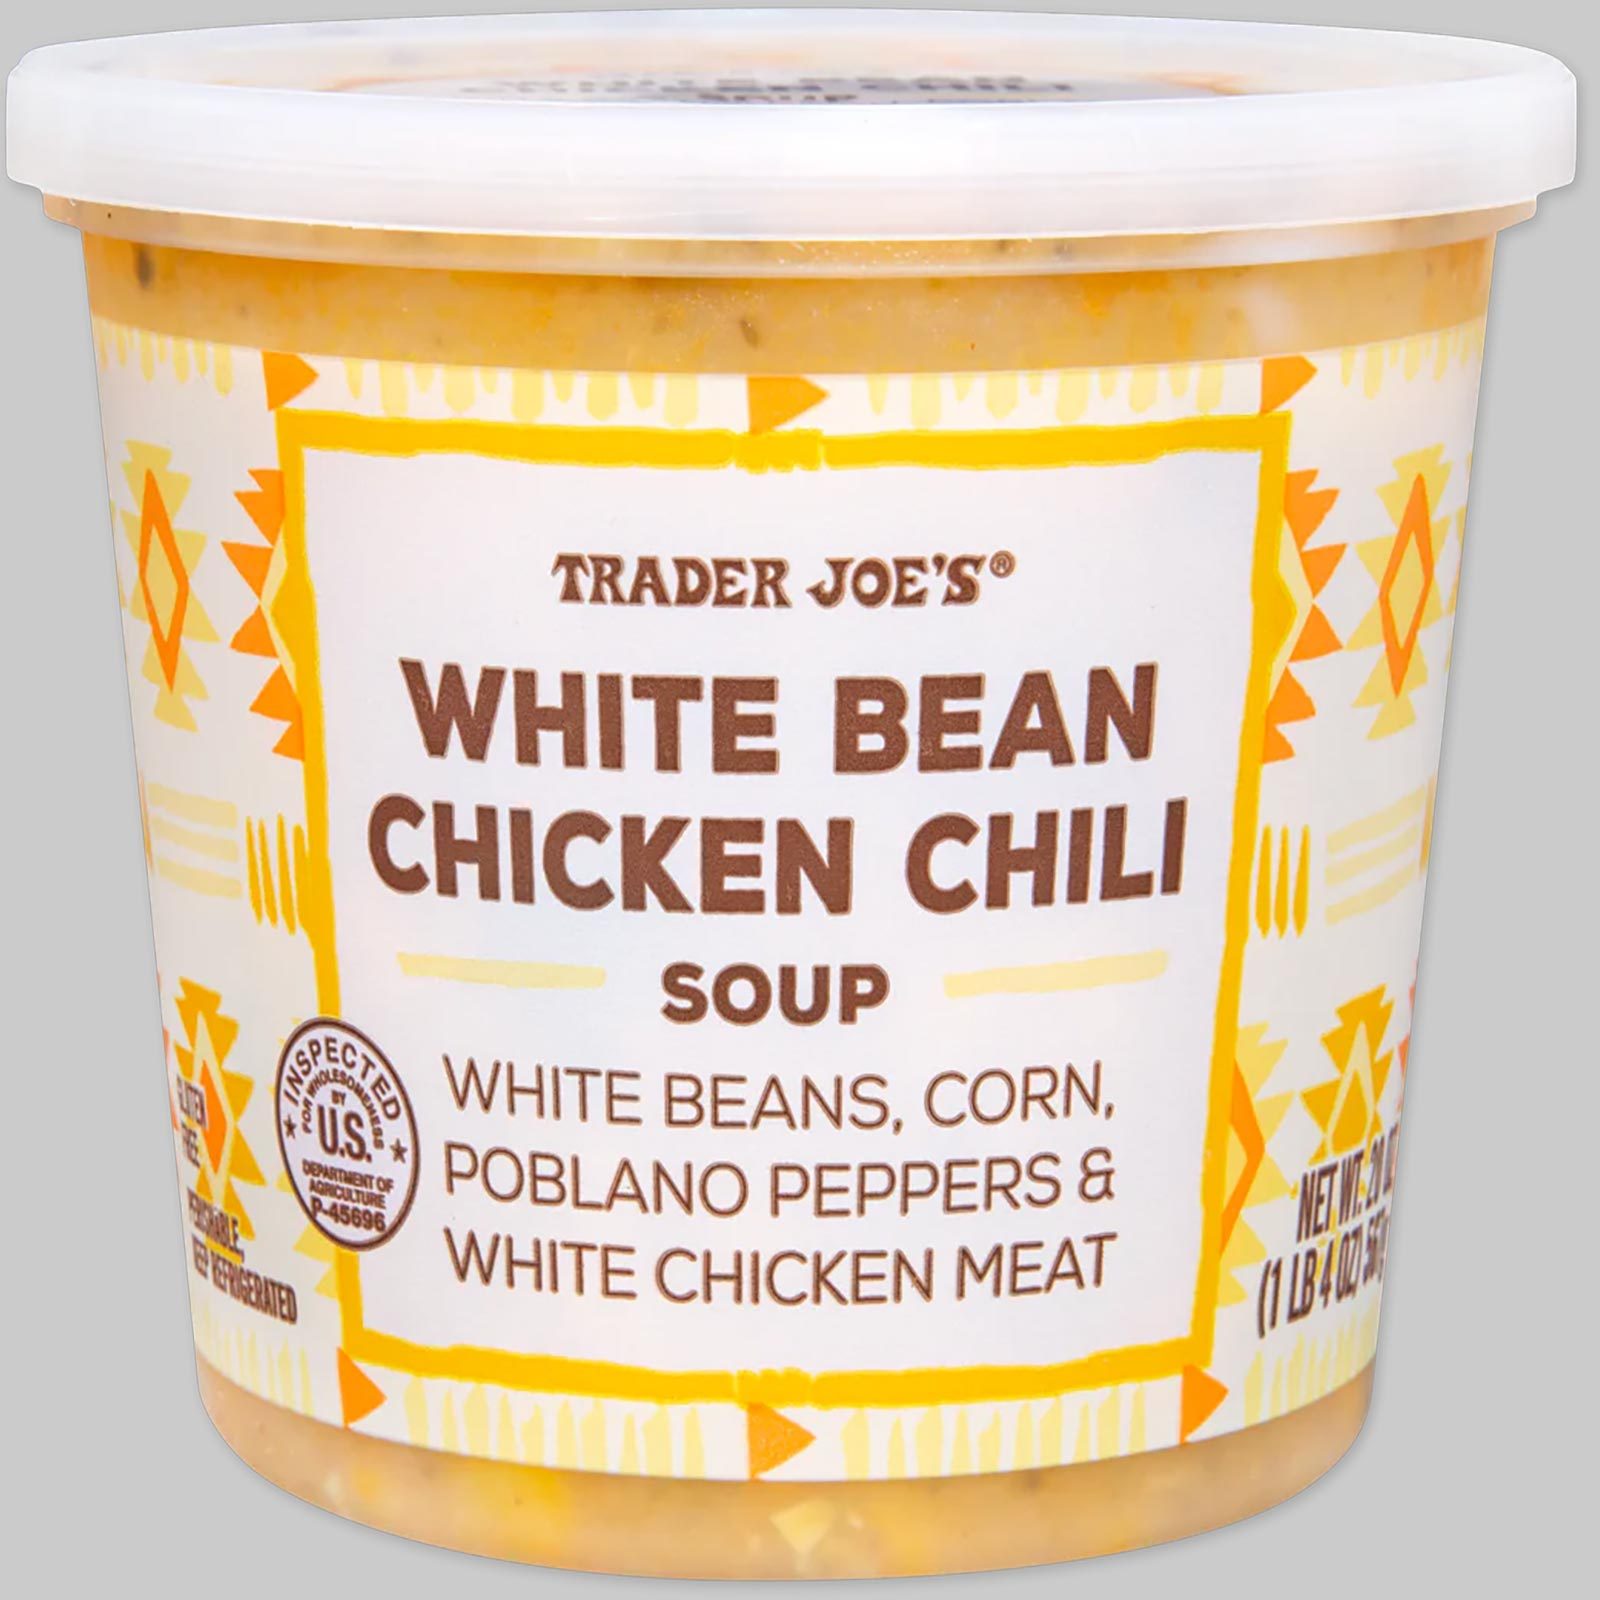 Trader Joe's White Bean Chicken Chili